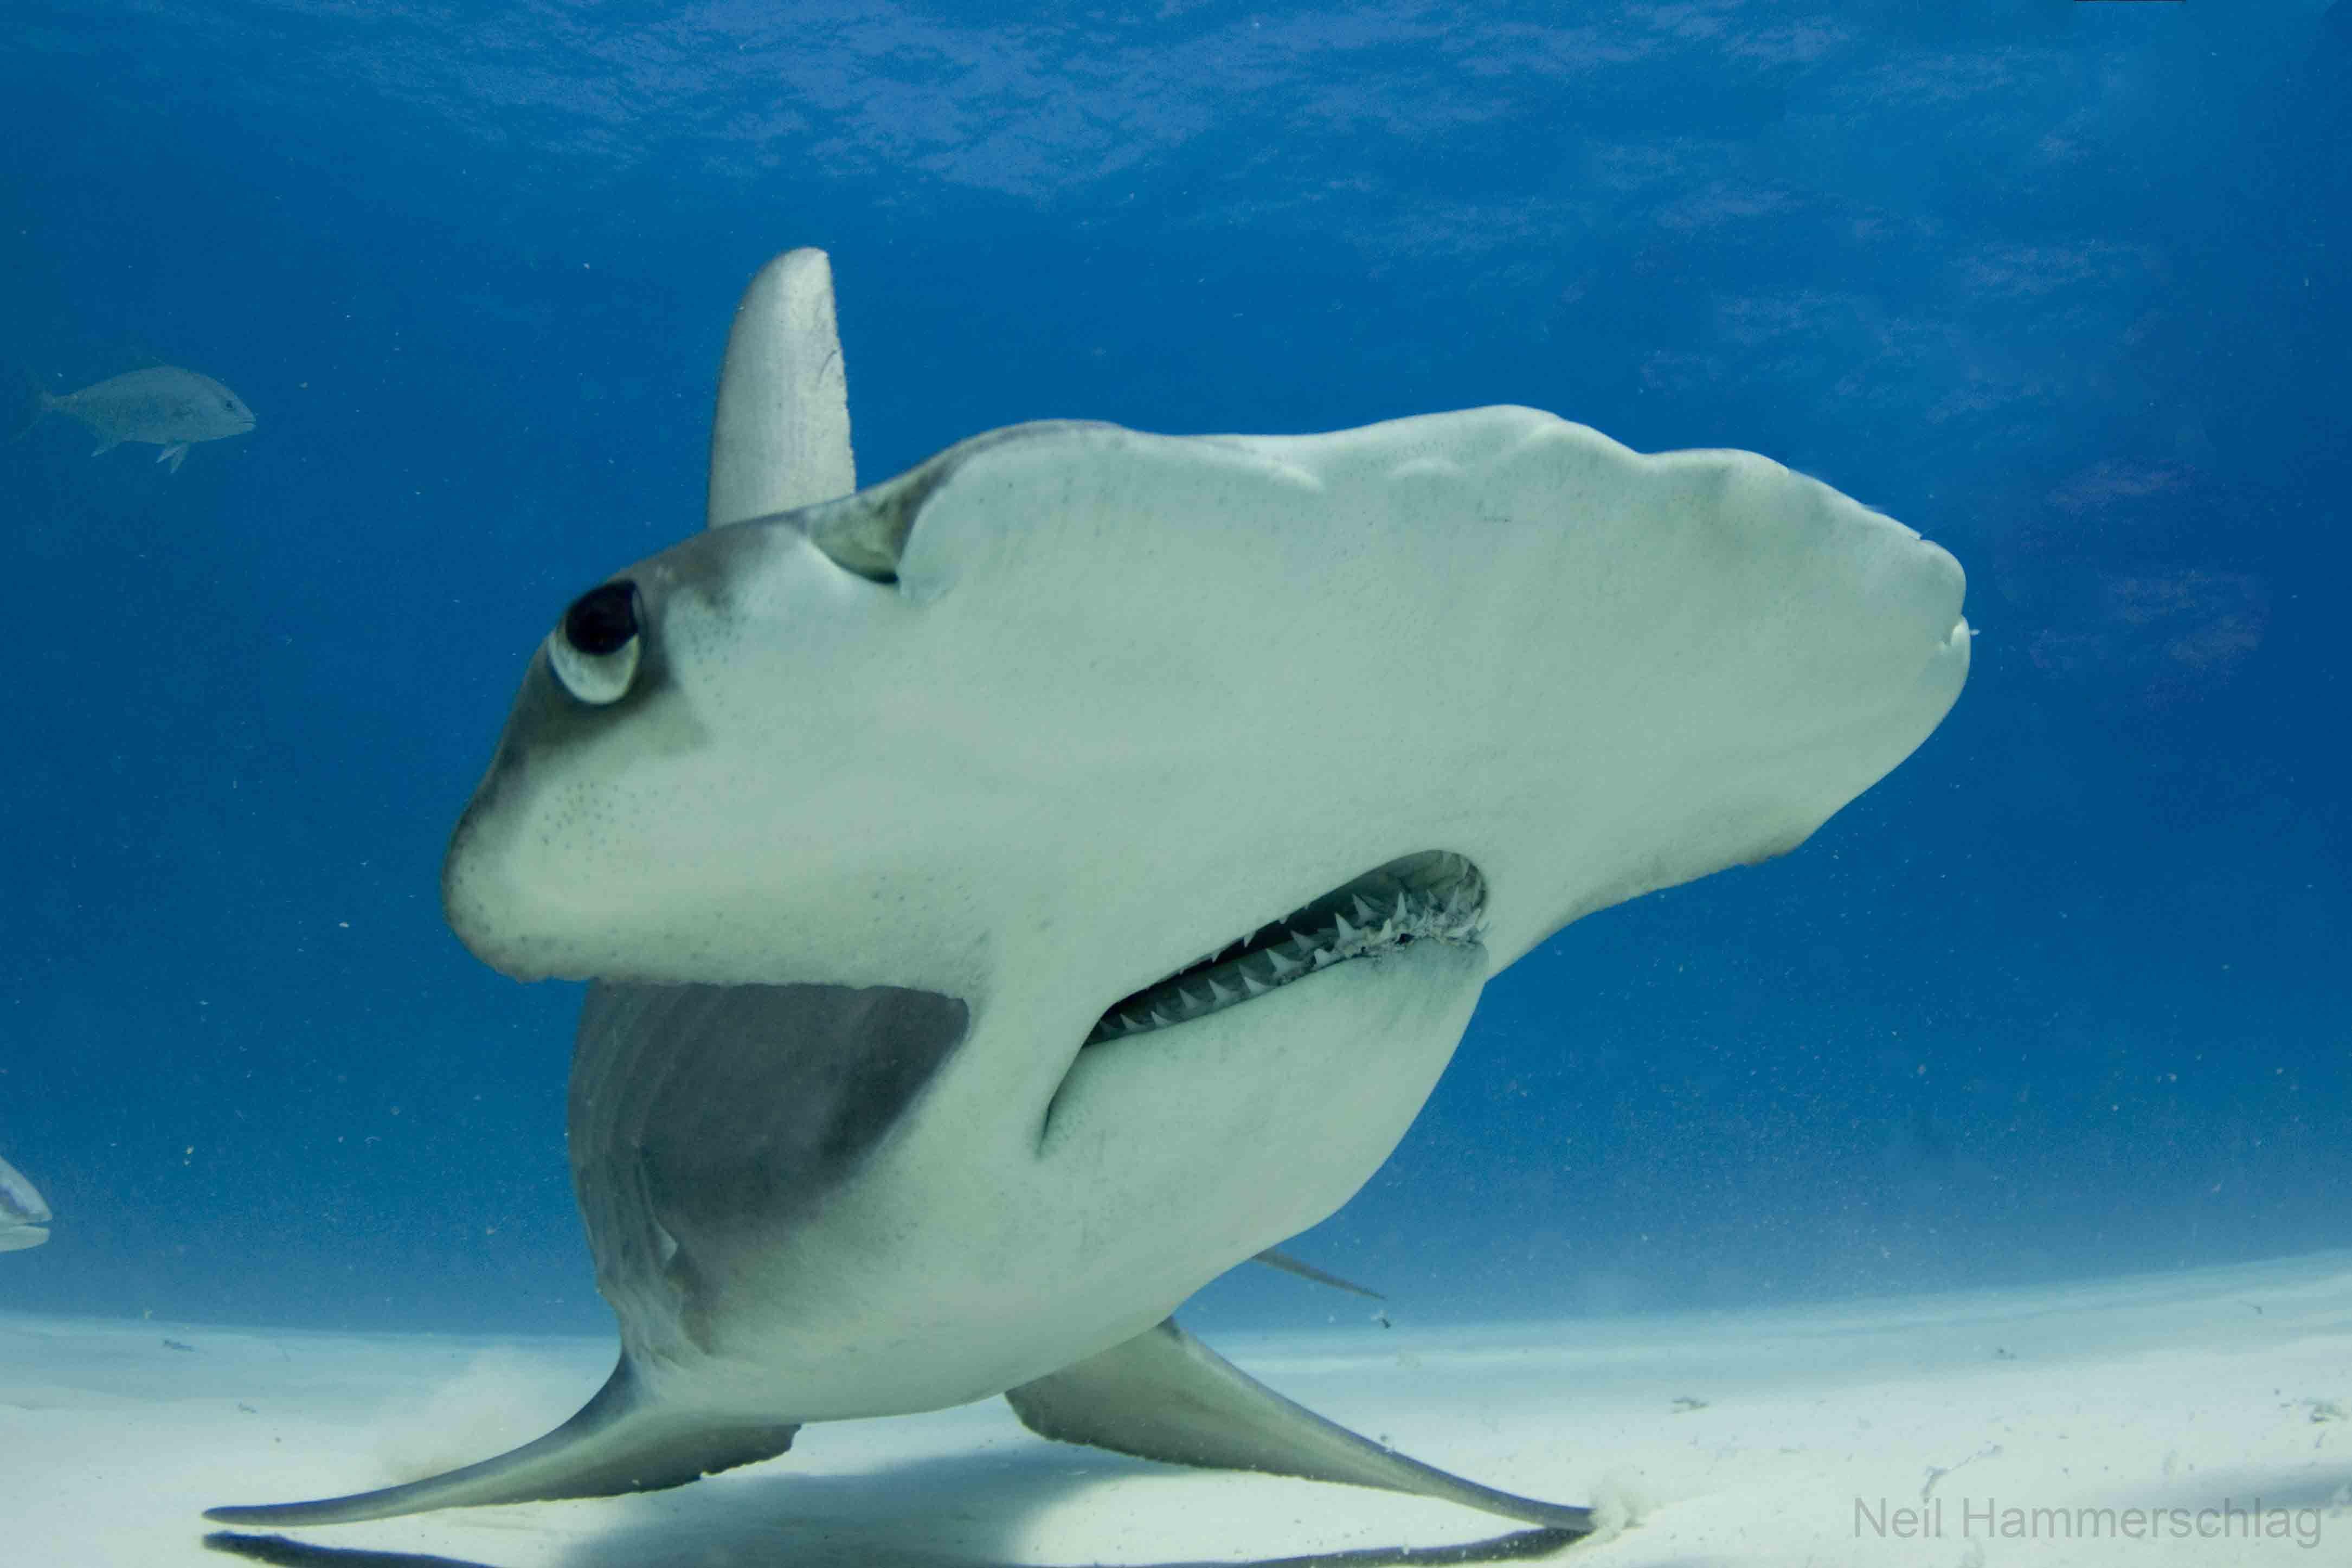 Hammerhead Shark Photo From “Exhilarating” Dive